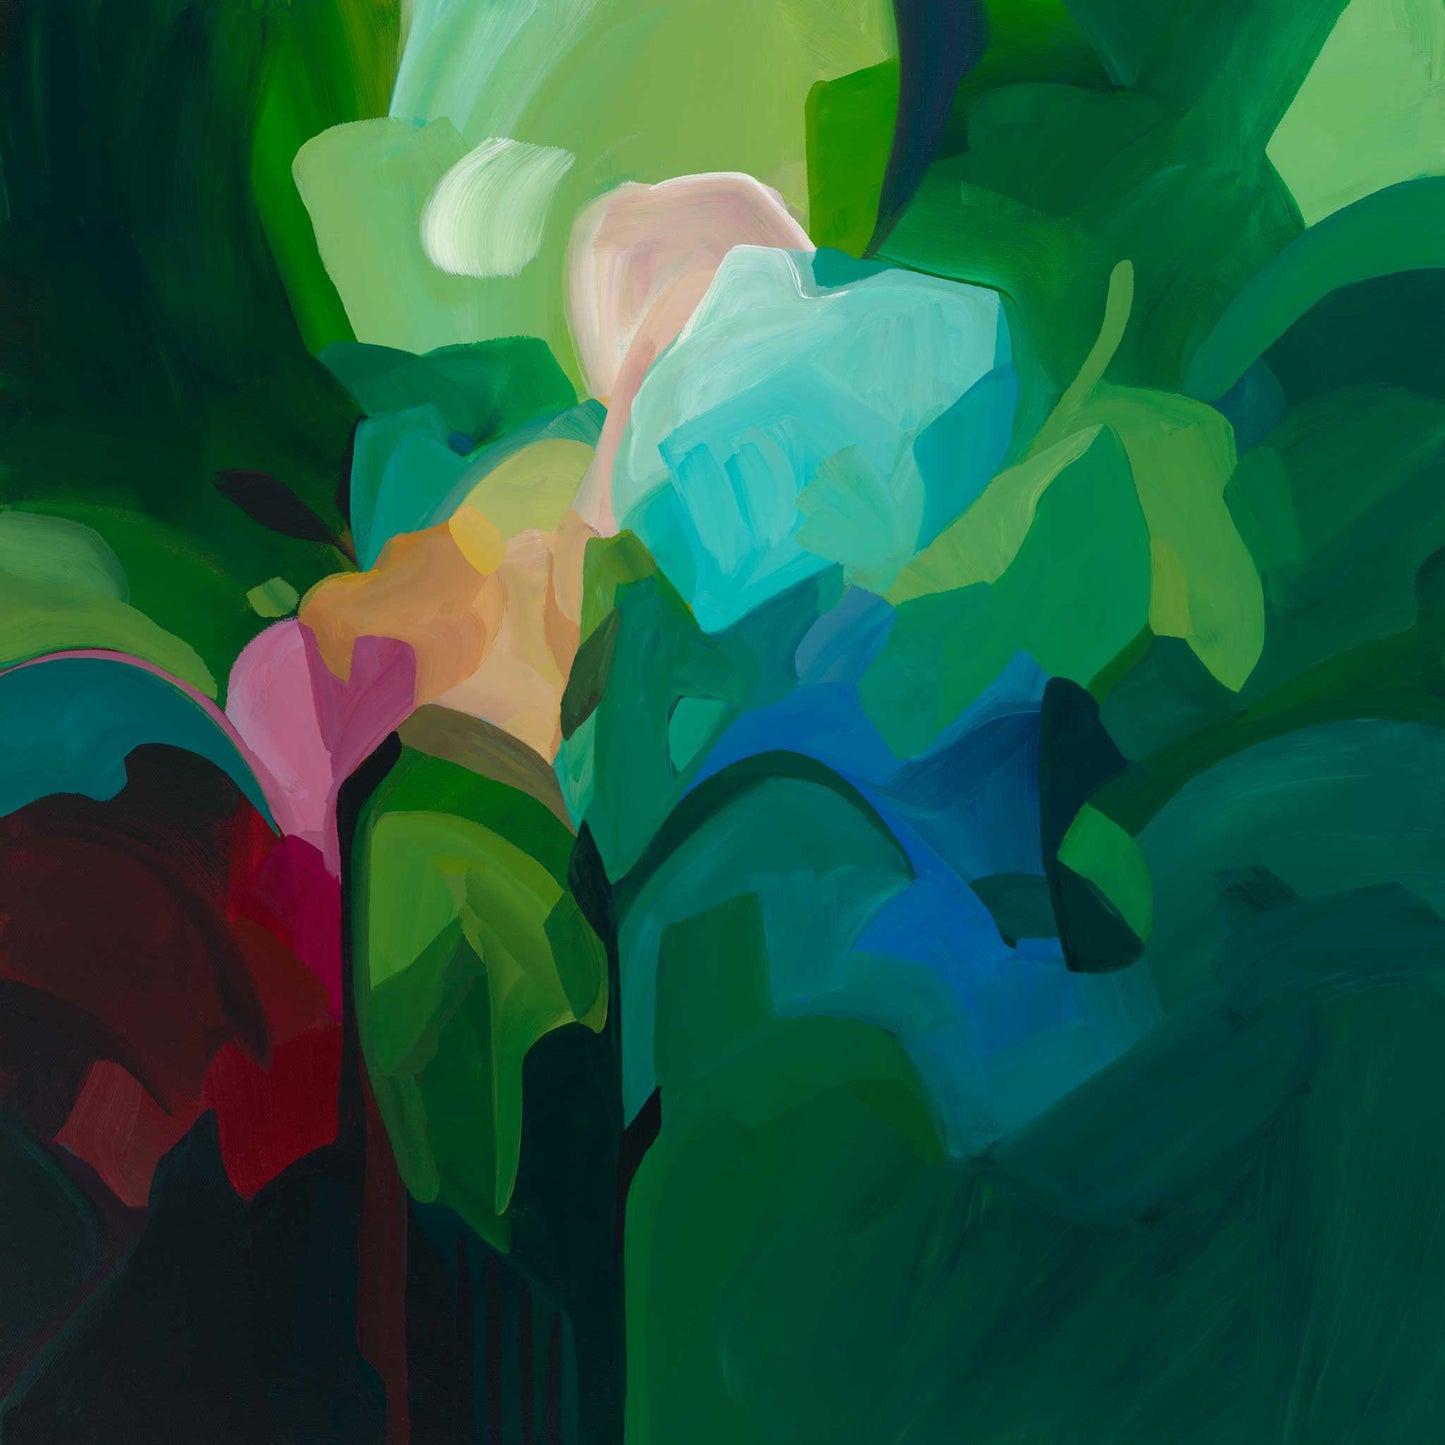 Emerald green abstract art print by Canadian artist Susannah Bleasby